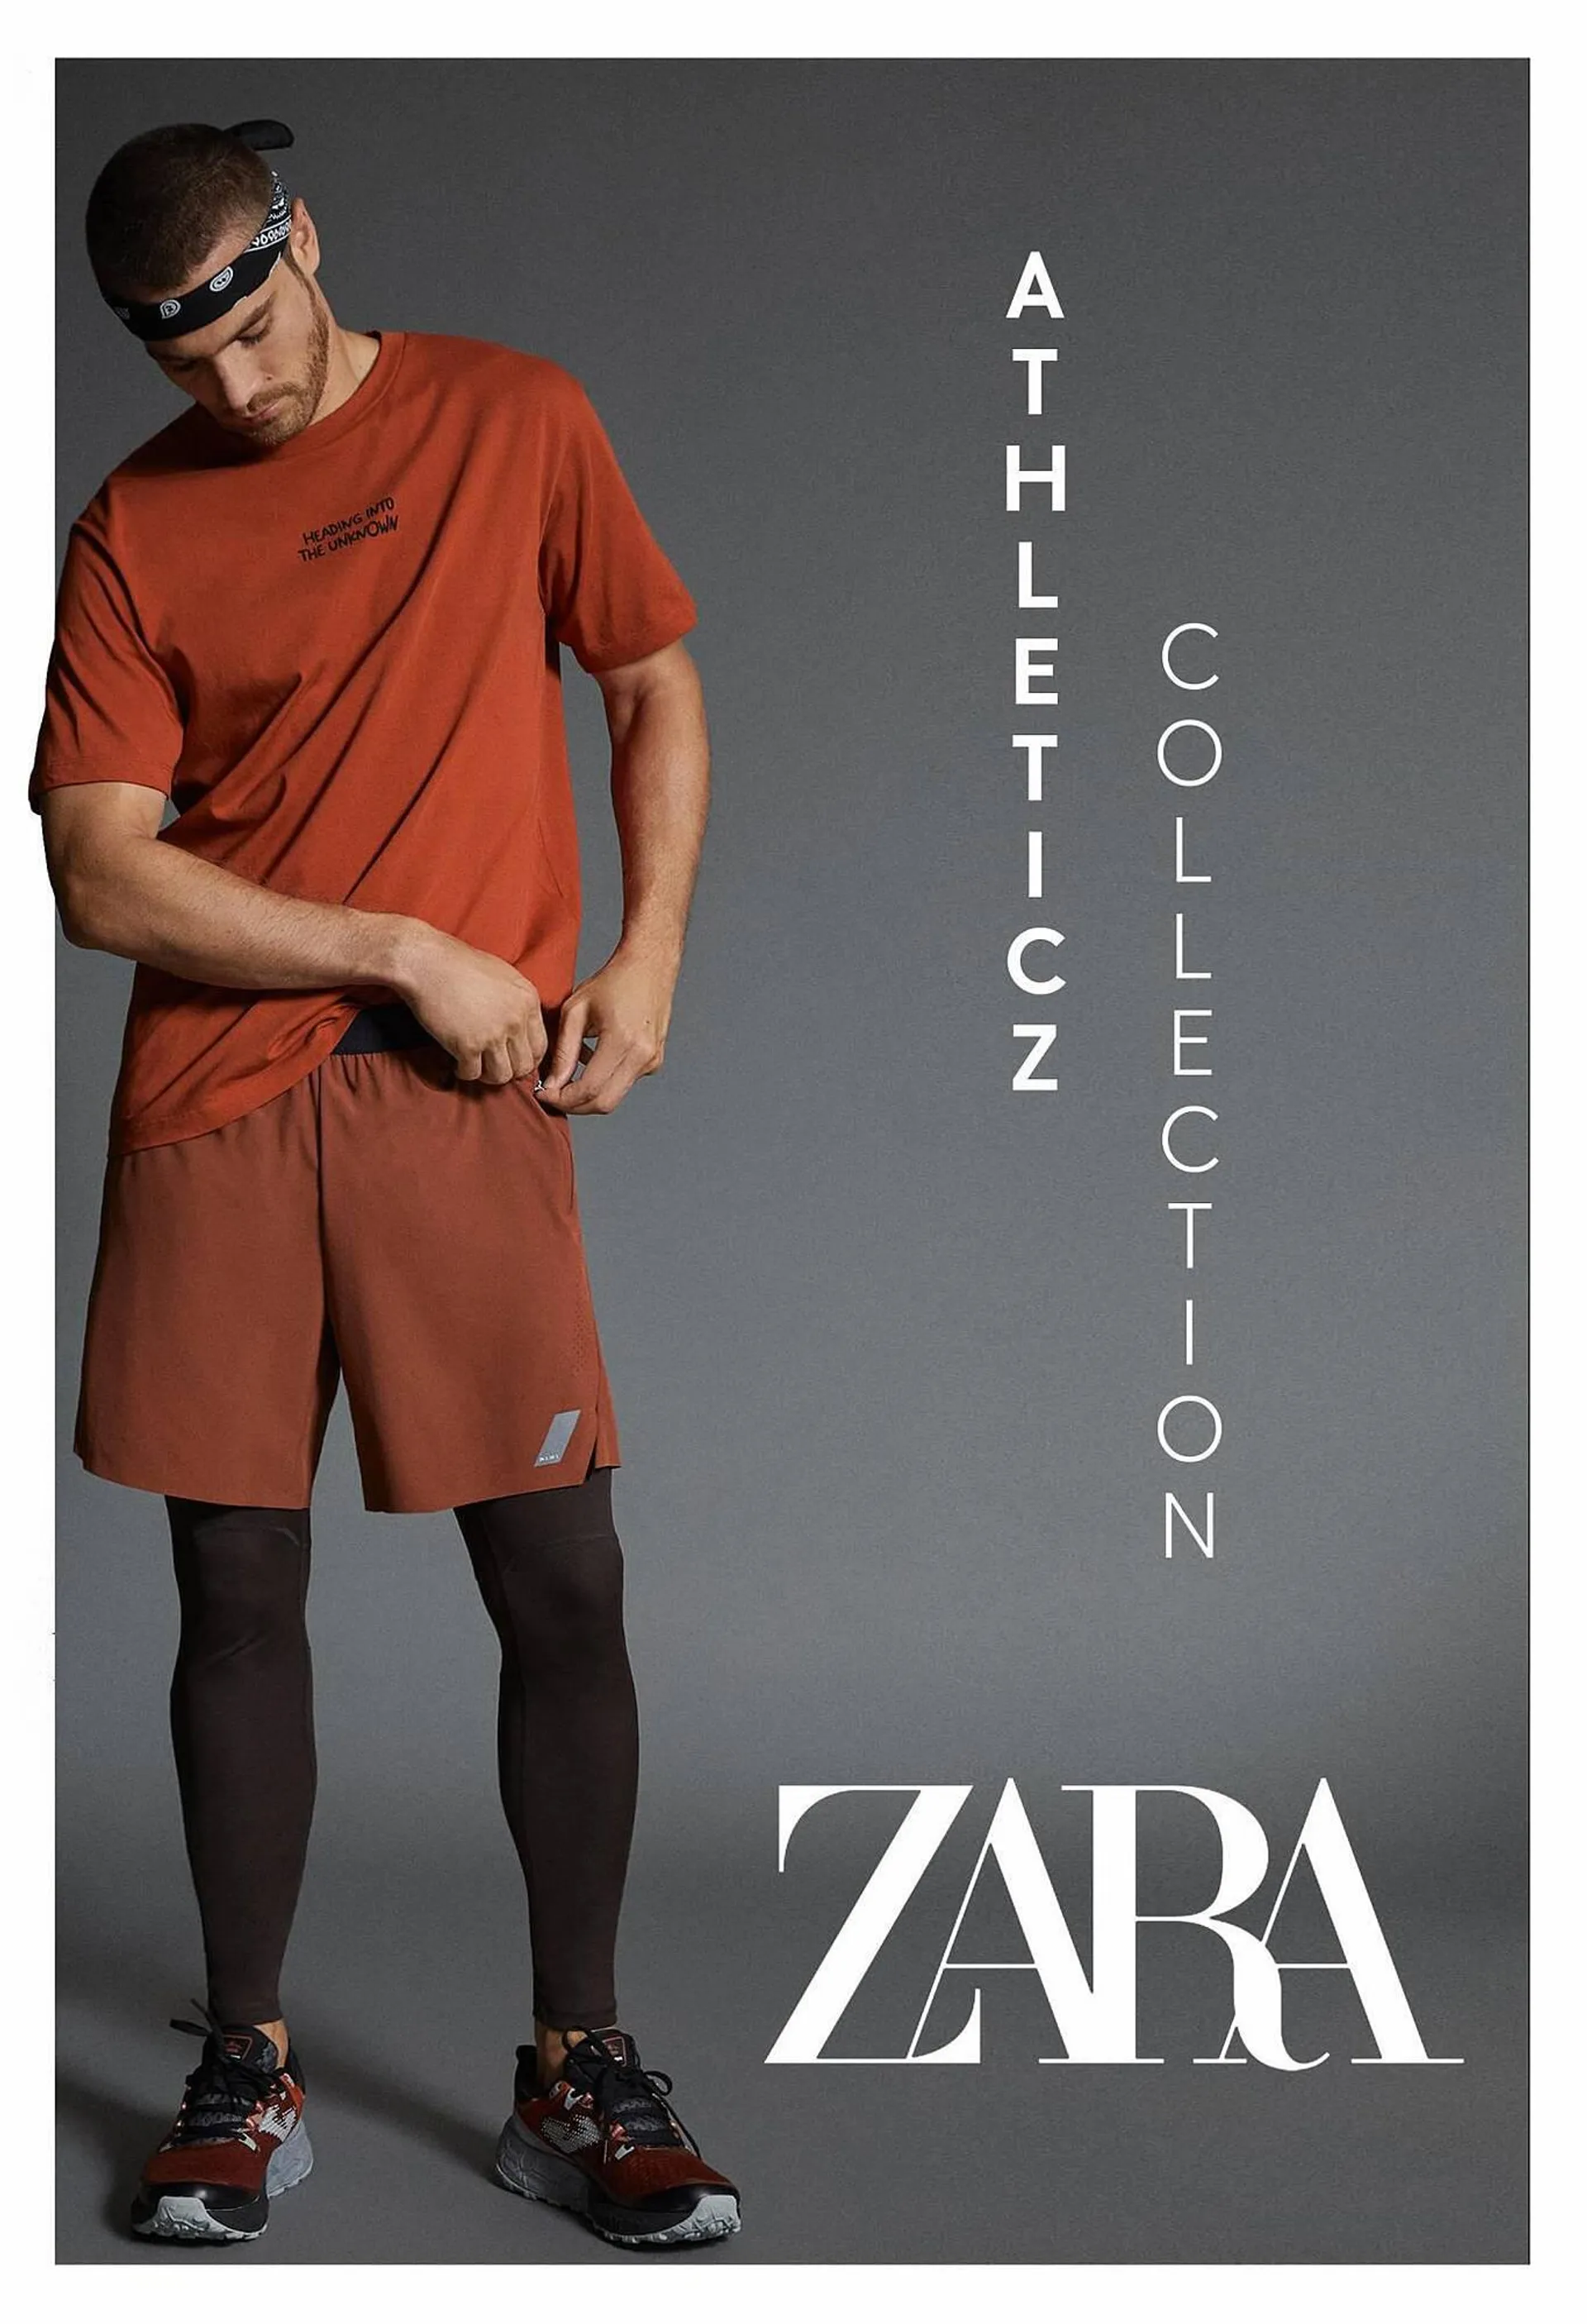 Zara catalog - 1